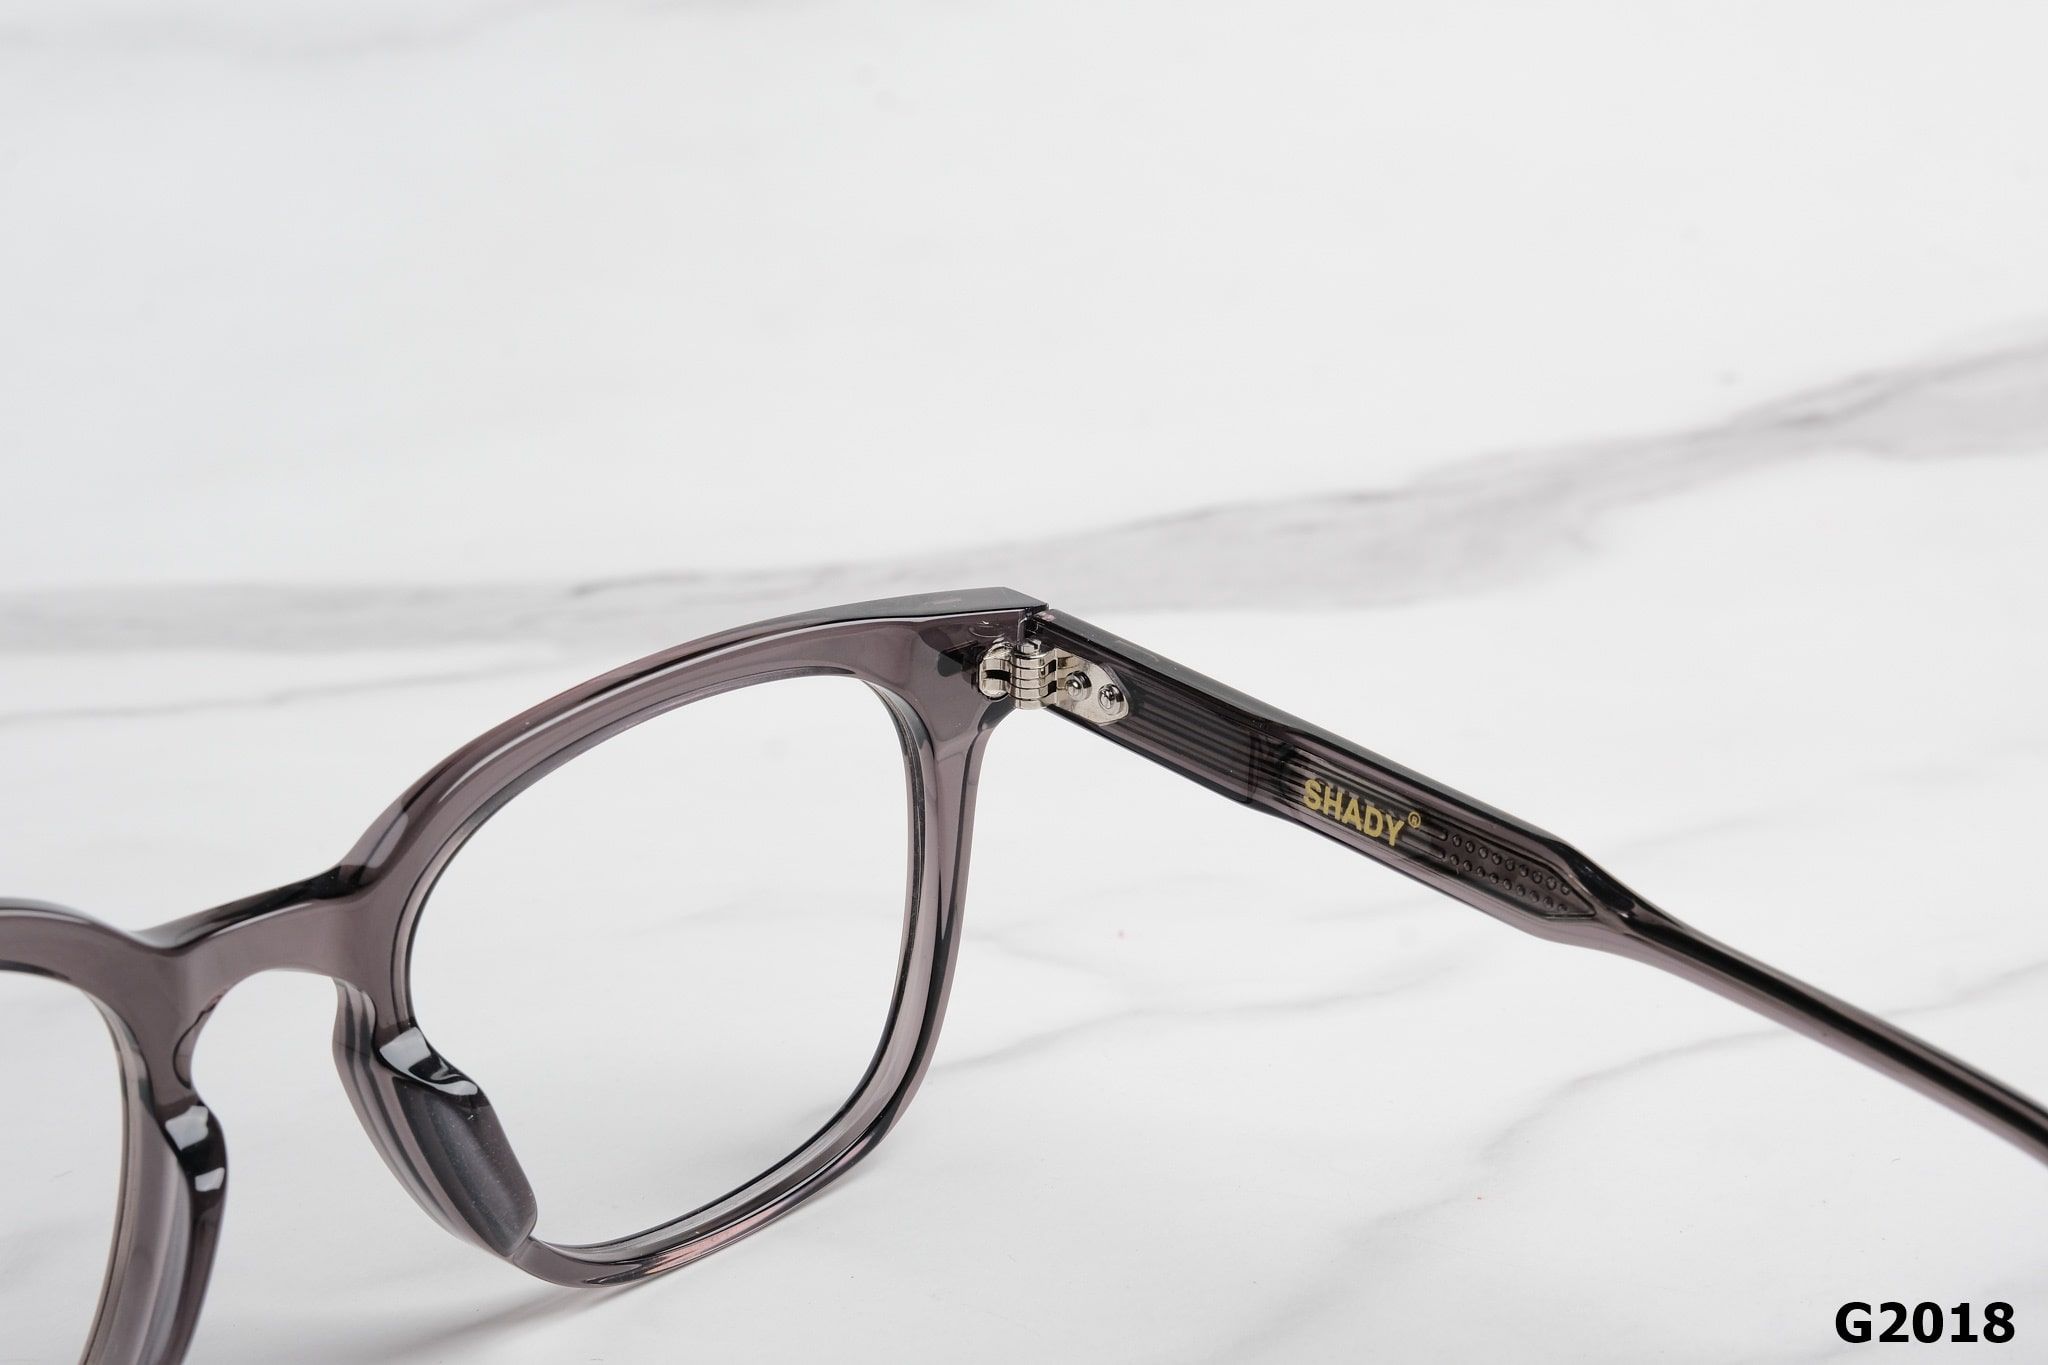  SHADY Eyewear - Glasses - G2018 